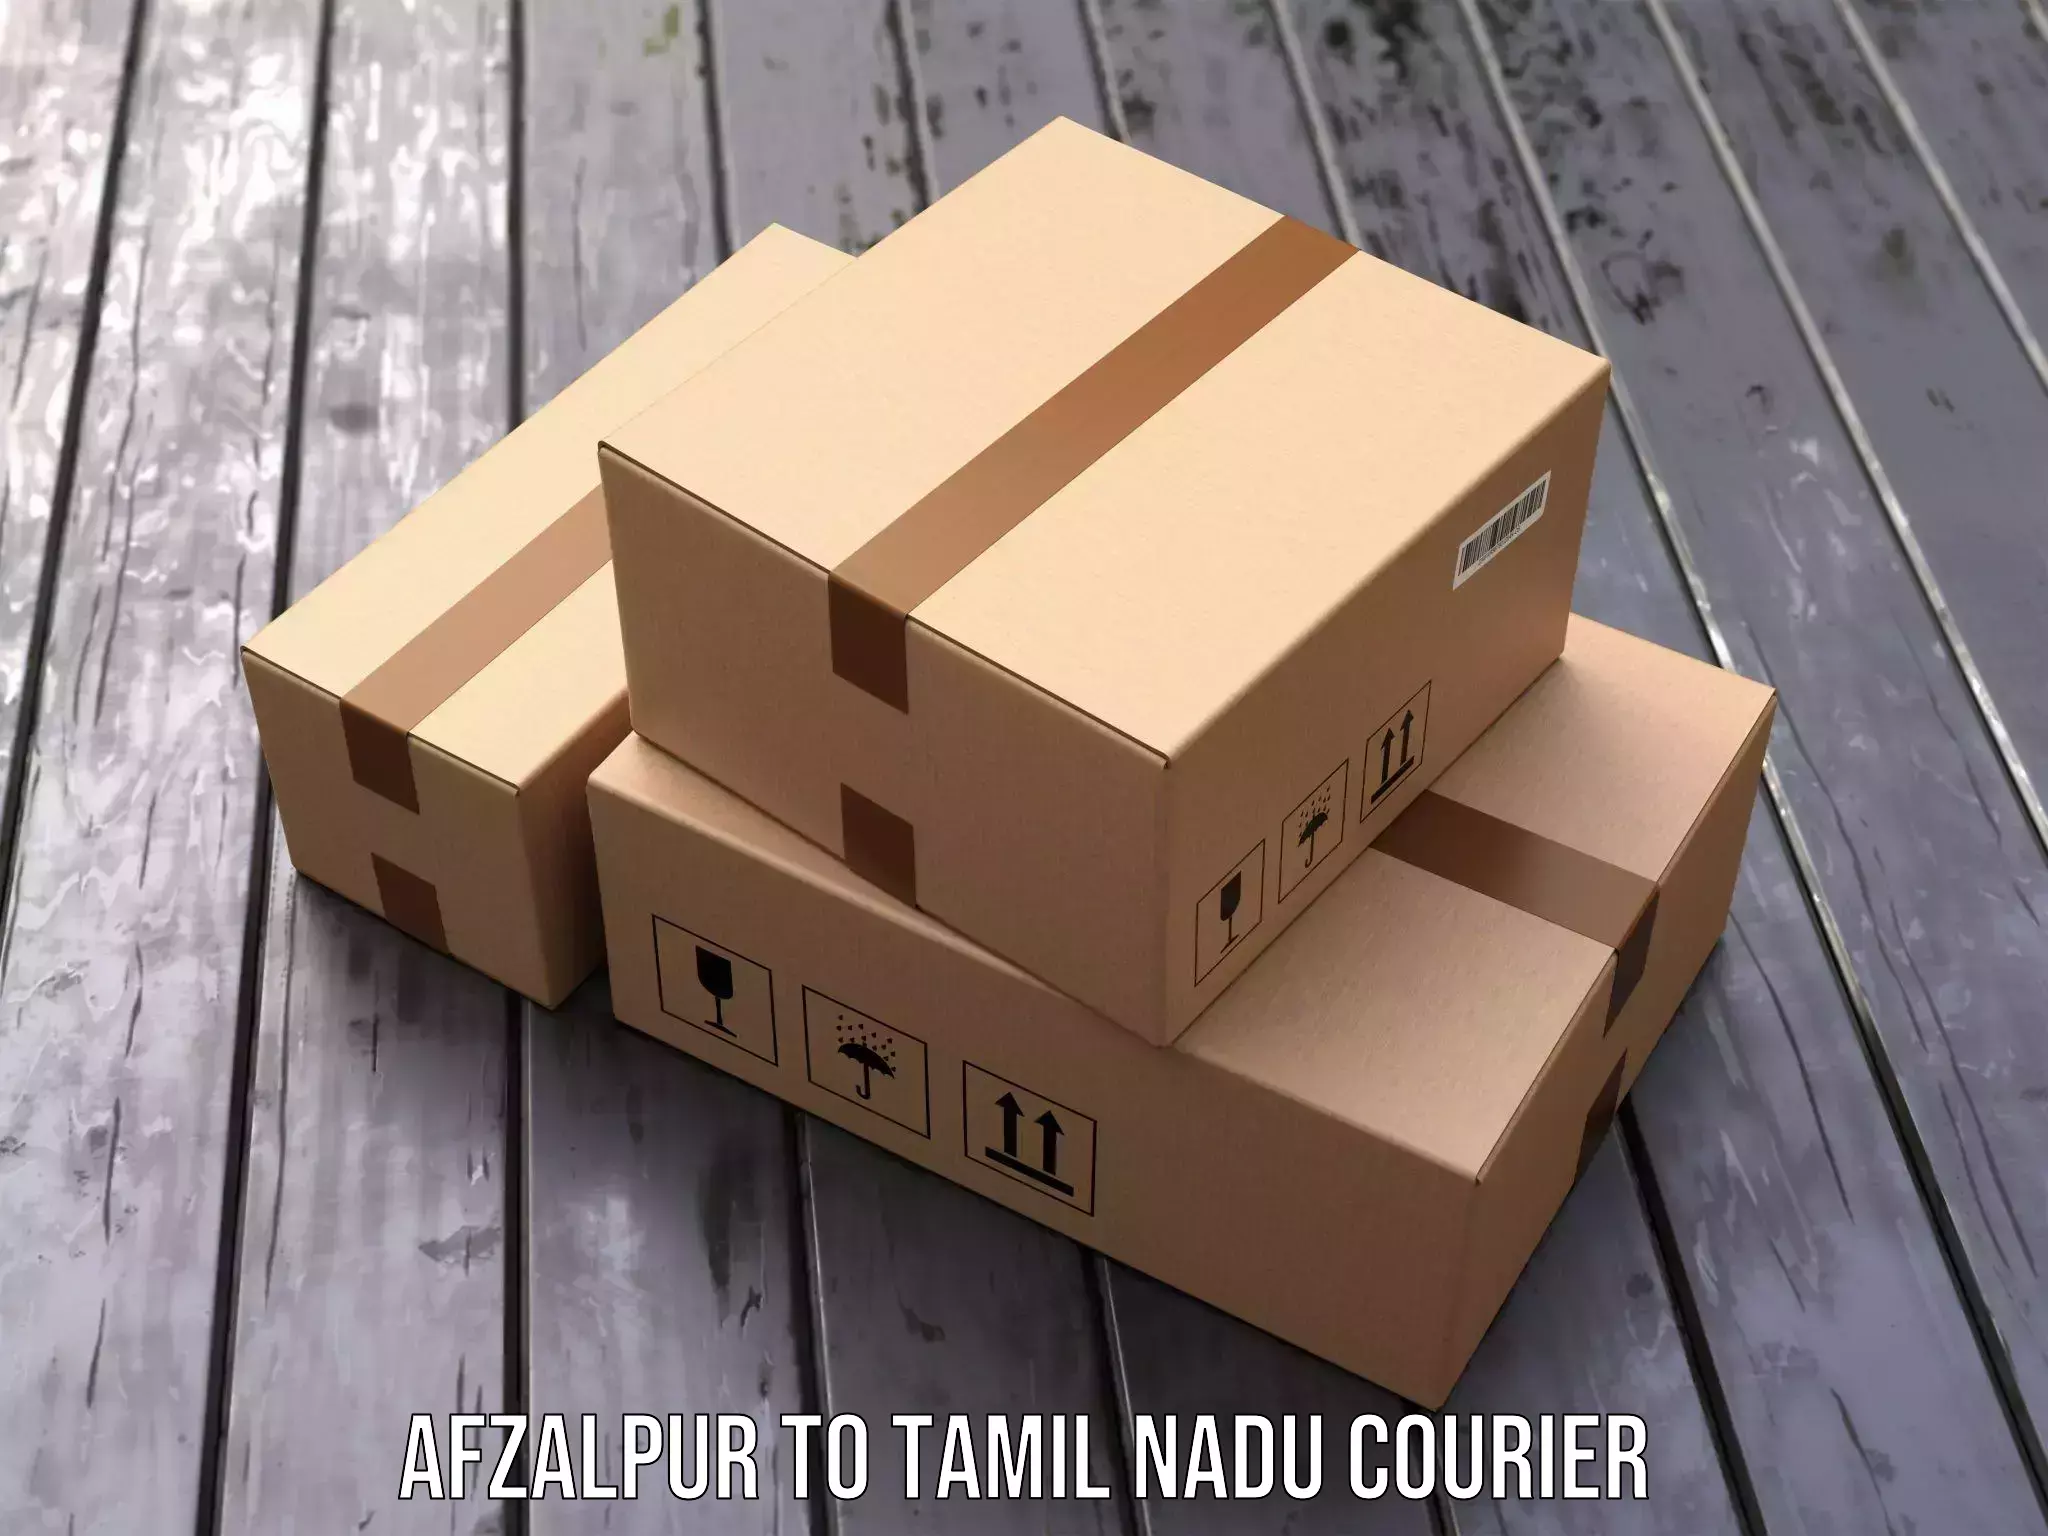 Digital courier platforms Afzalpur to Bodinayakanur